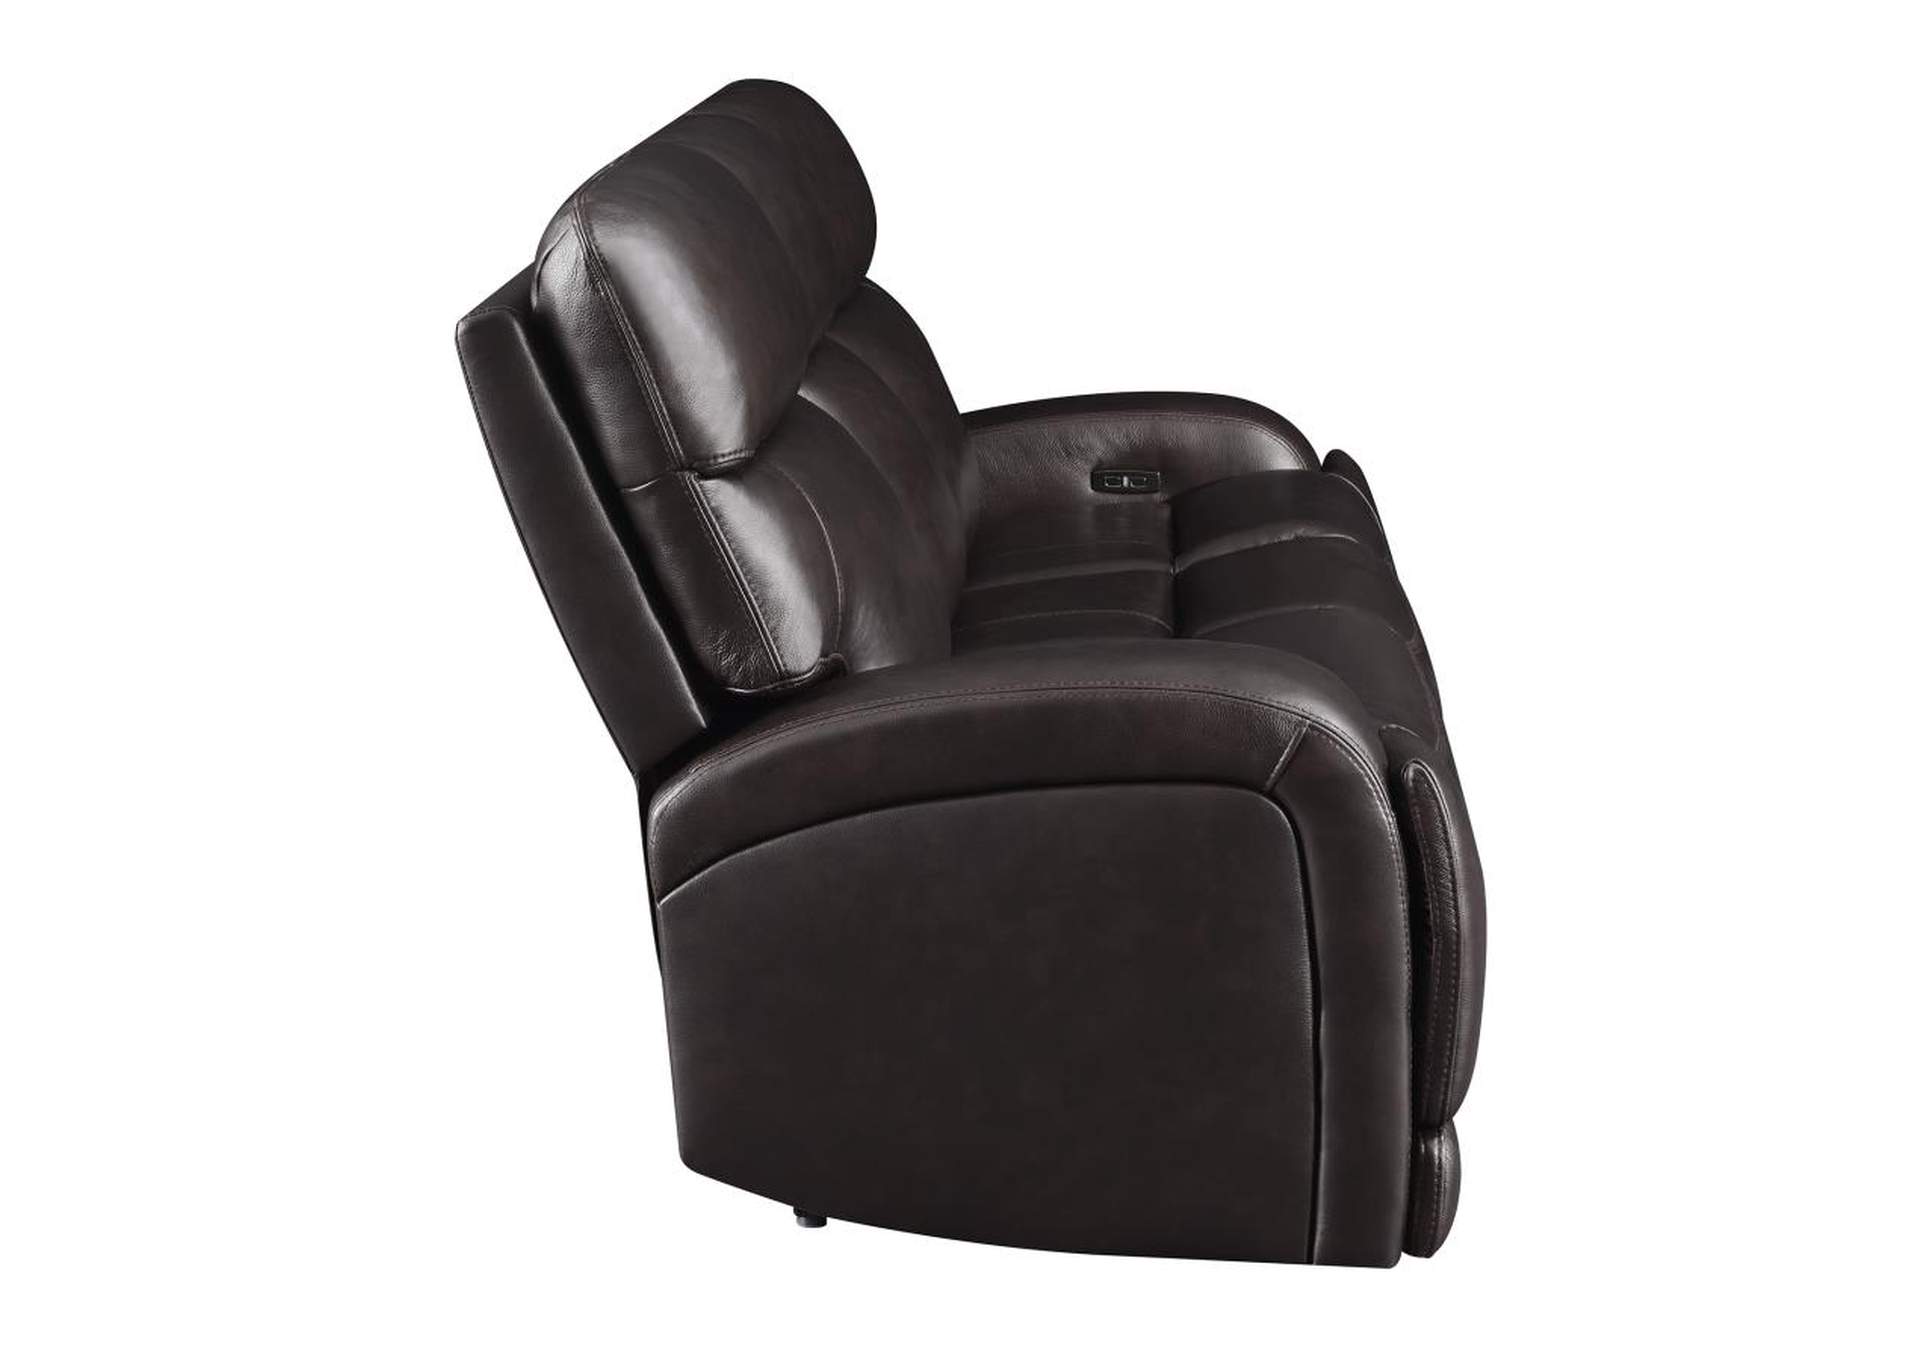 Longport Upholstered Power Sofa Dark Brown,Coaster Furniture